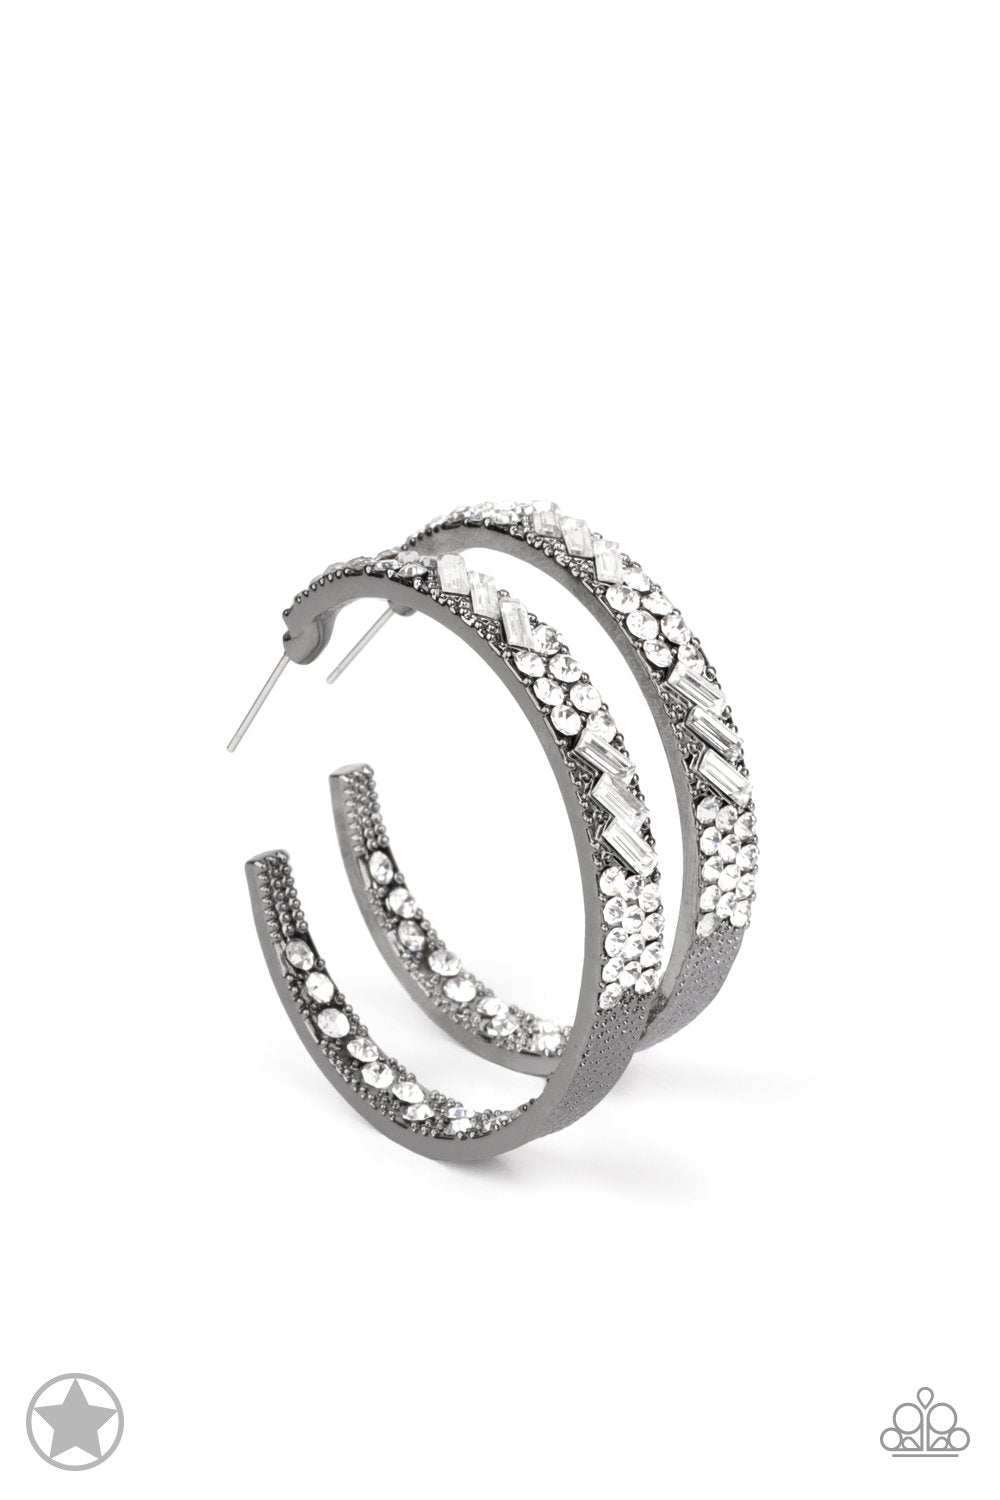 Glitzy By Association Gunmetal and White Rhinestone Earrings - Paparazzi Accessories - lightbox -CarasShop.com - $5 Jewelry by Cara Jewels